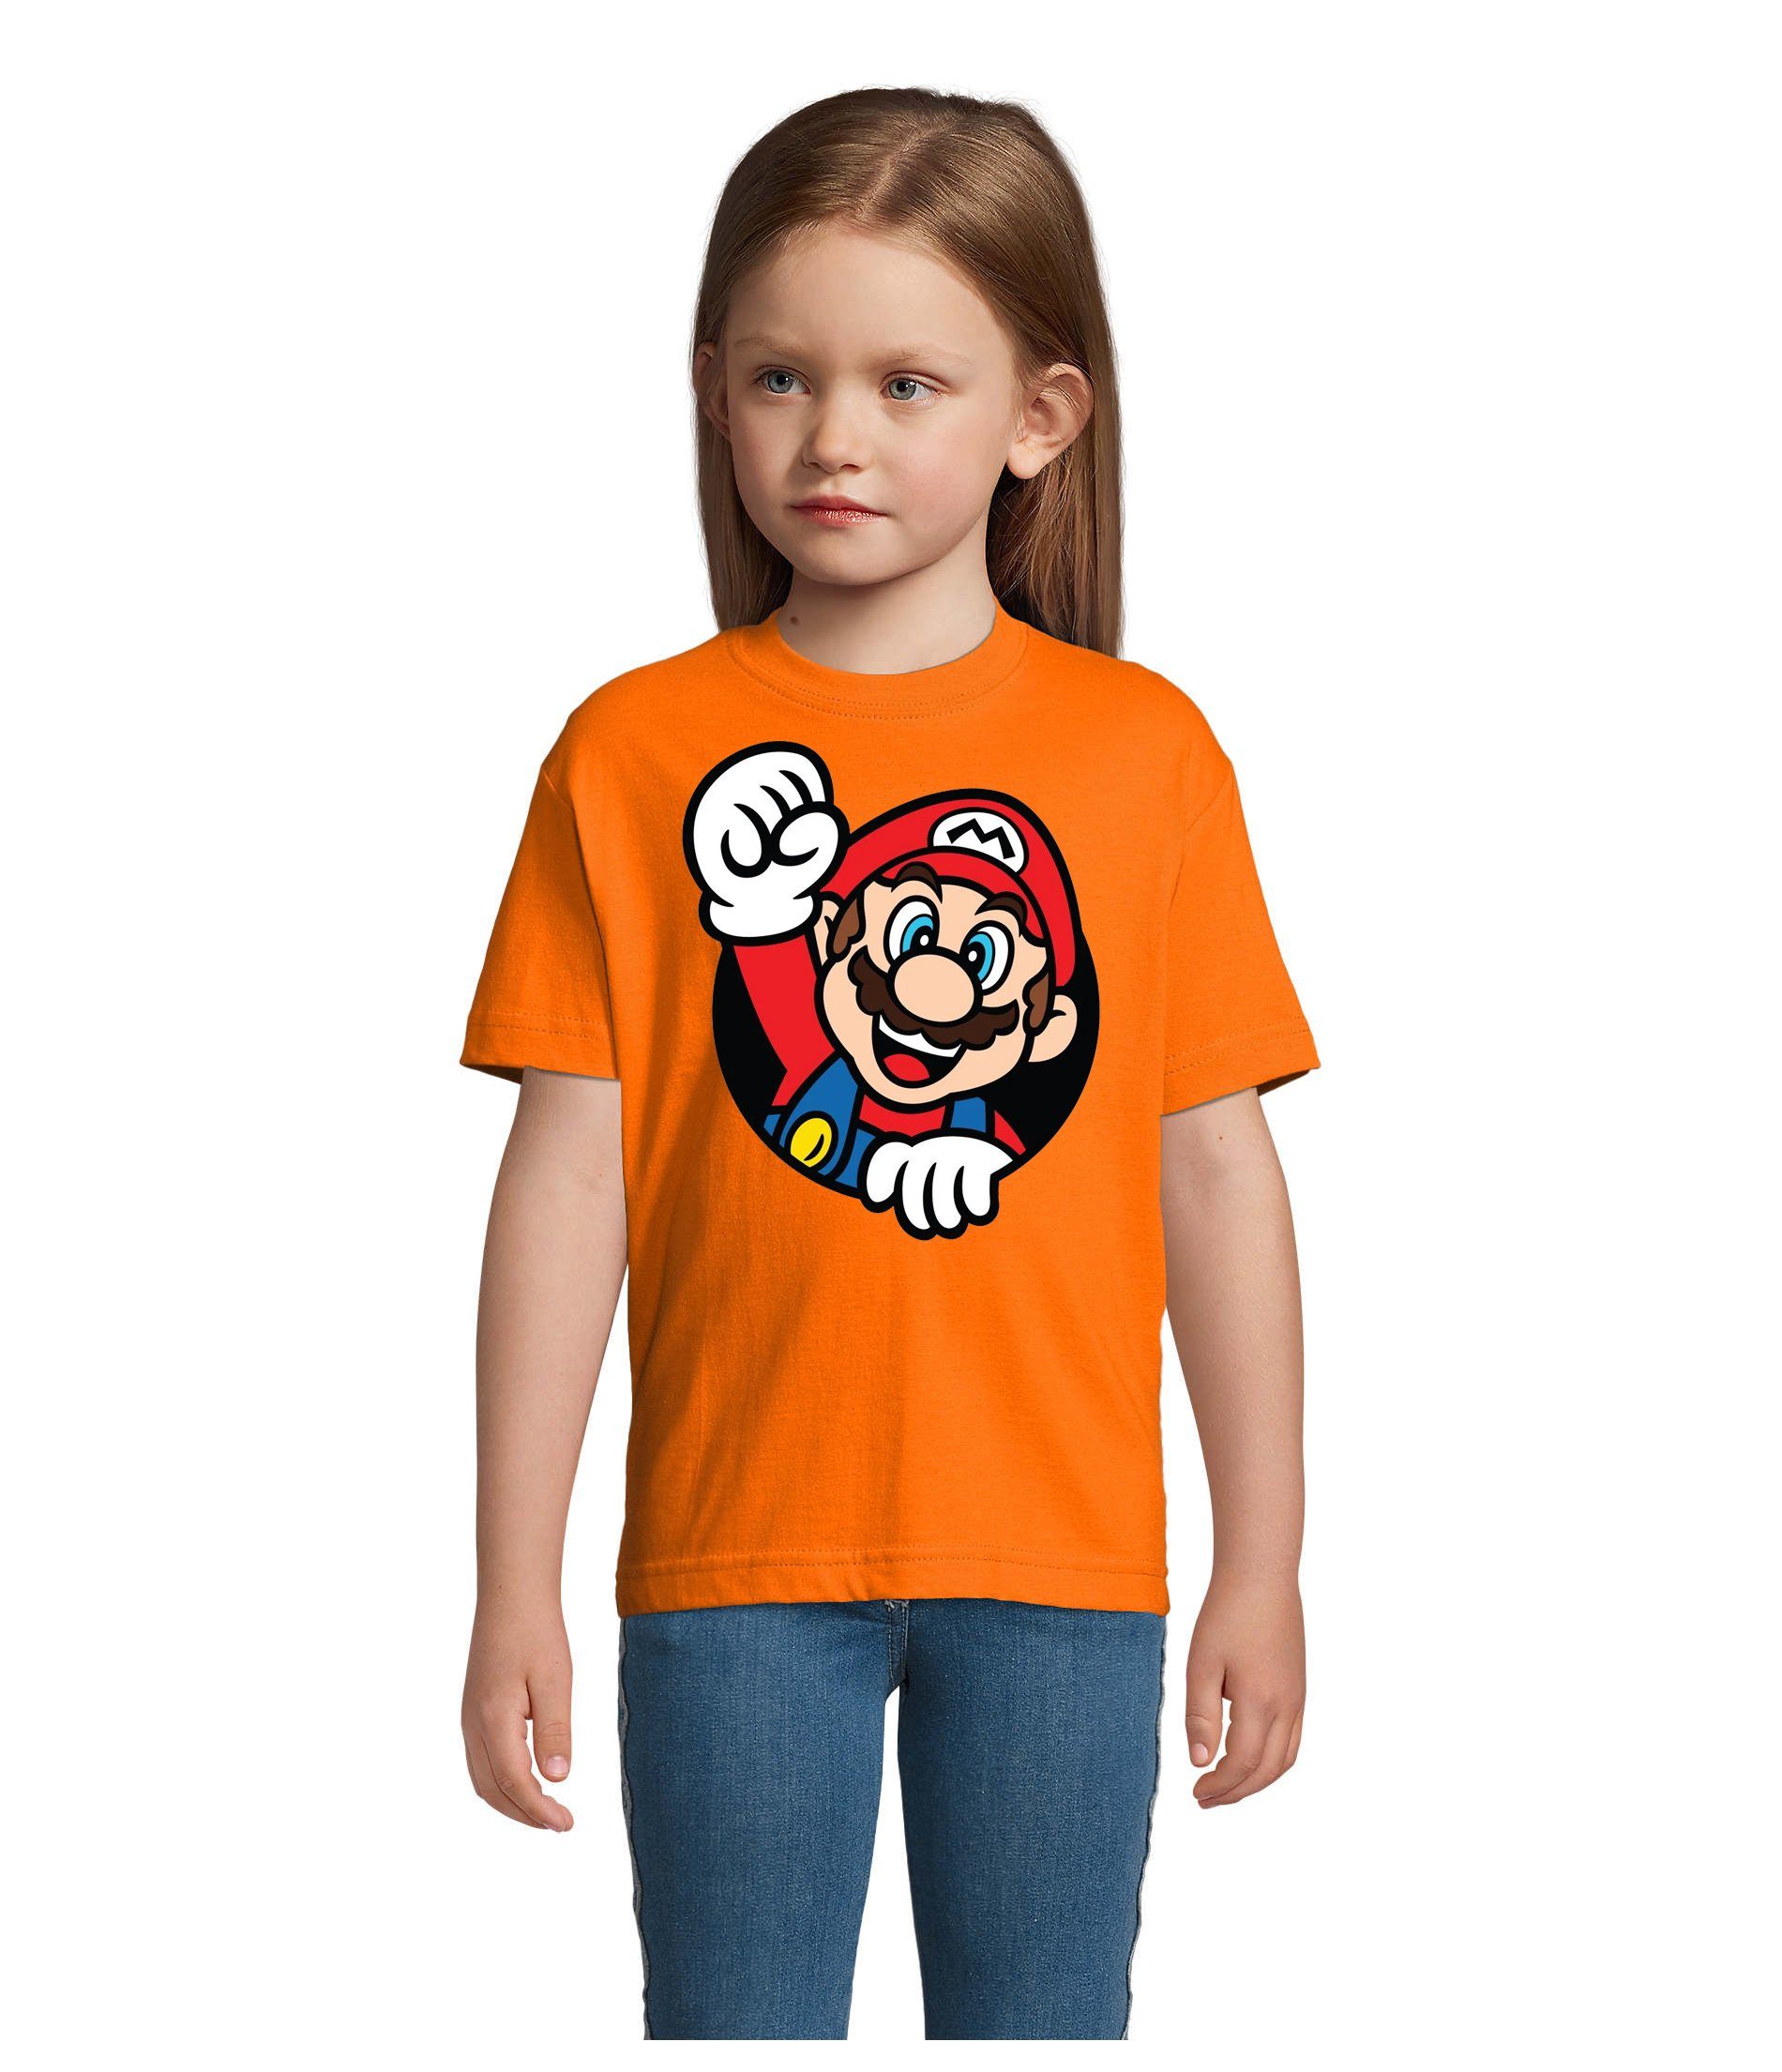 Blondie & Brownie T-Shirt Kinder Super Mario Faust Nerd Konsole Gaming Spiel Nintendo Konsole Orange